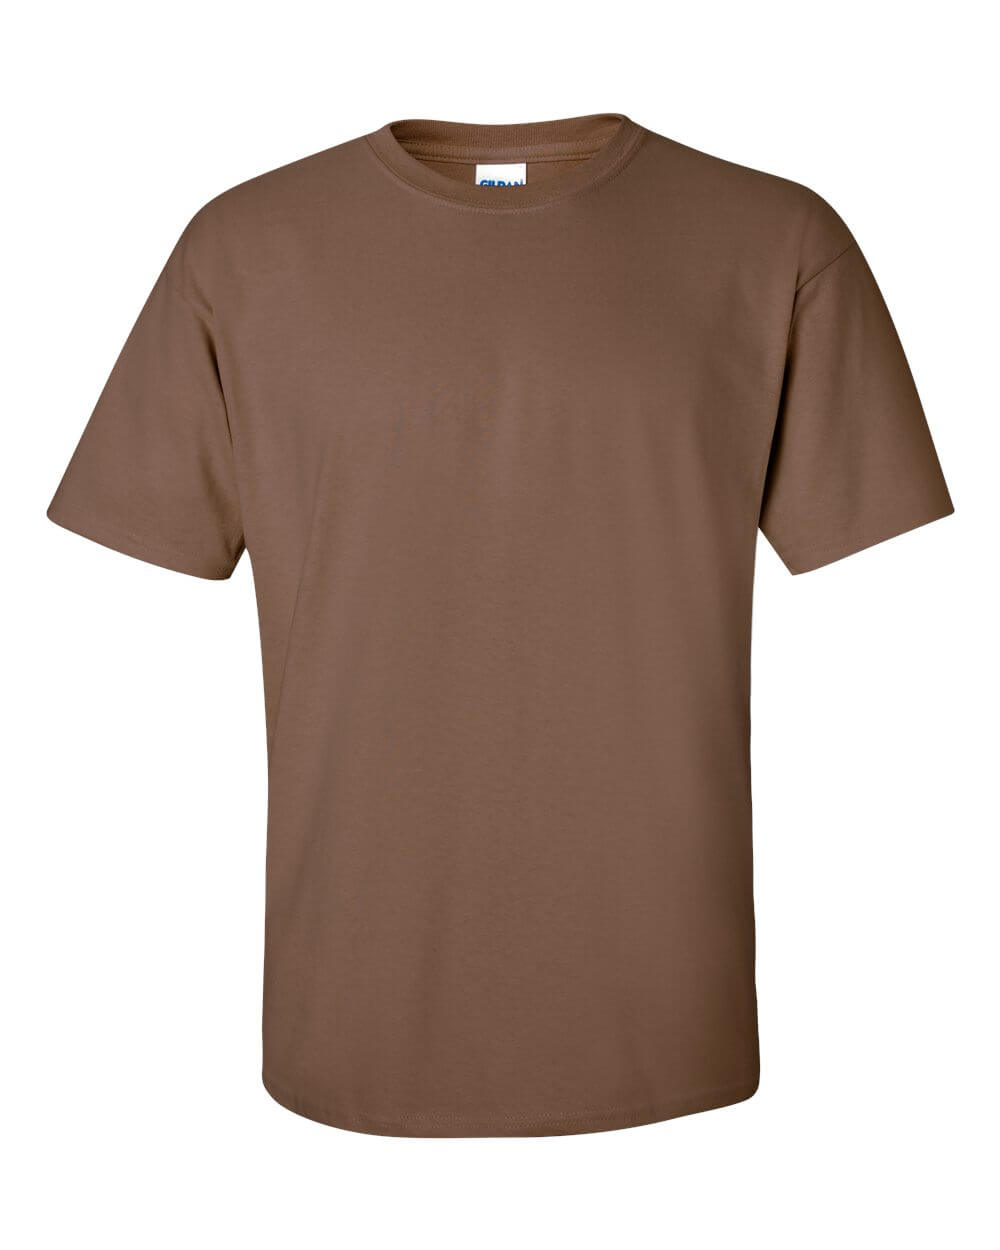 Durable Brown Crewneck Tee Shirts